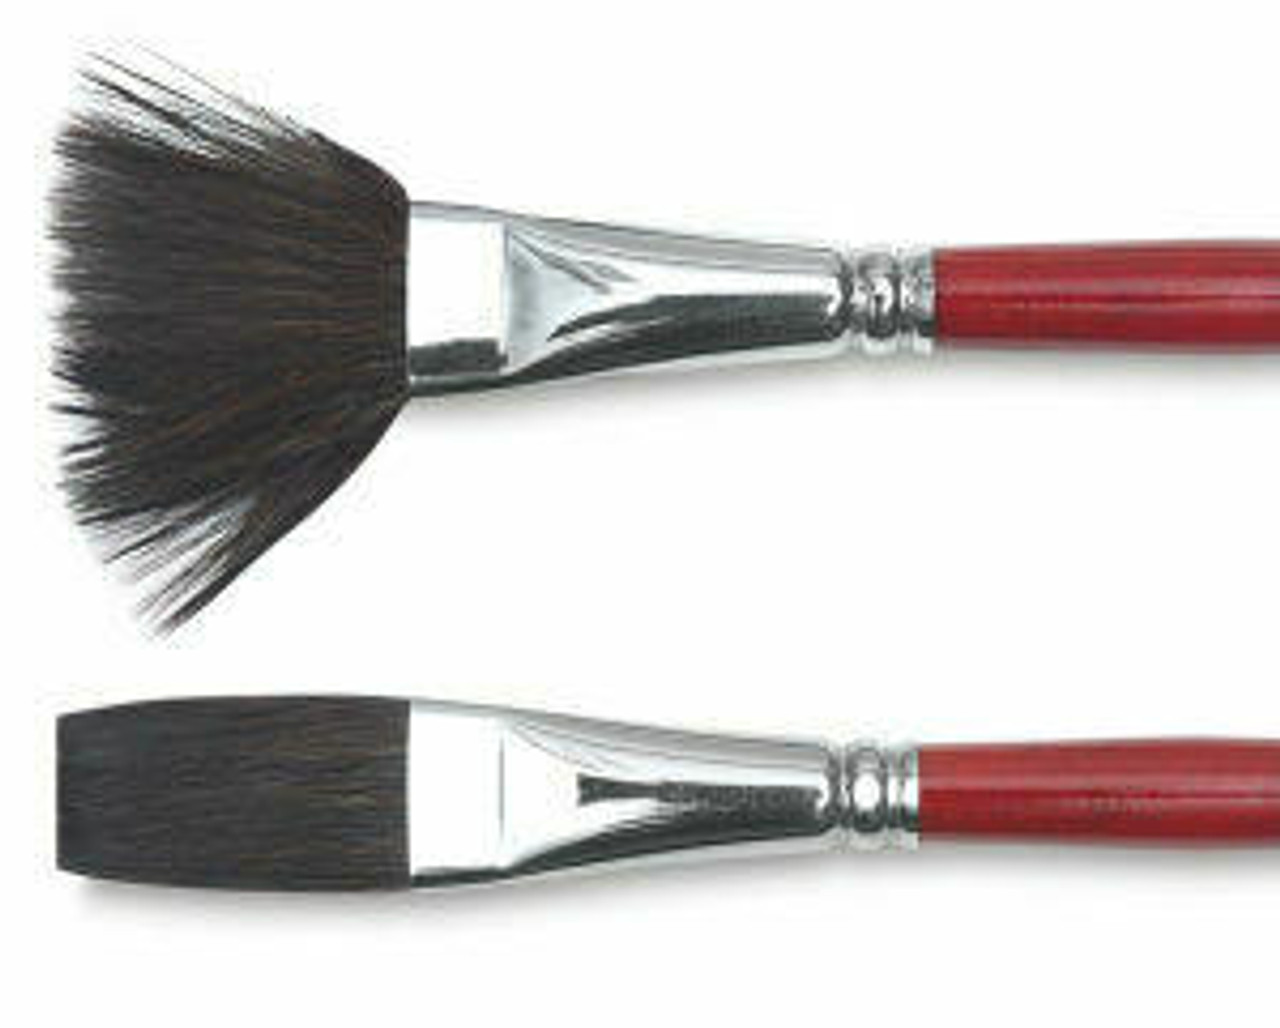 Angelus Synthetic Paint Brush Set - Micro Detail, Set of 5, Short Handle